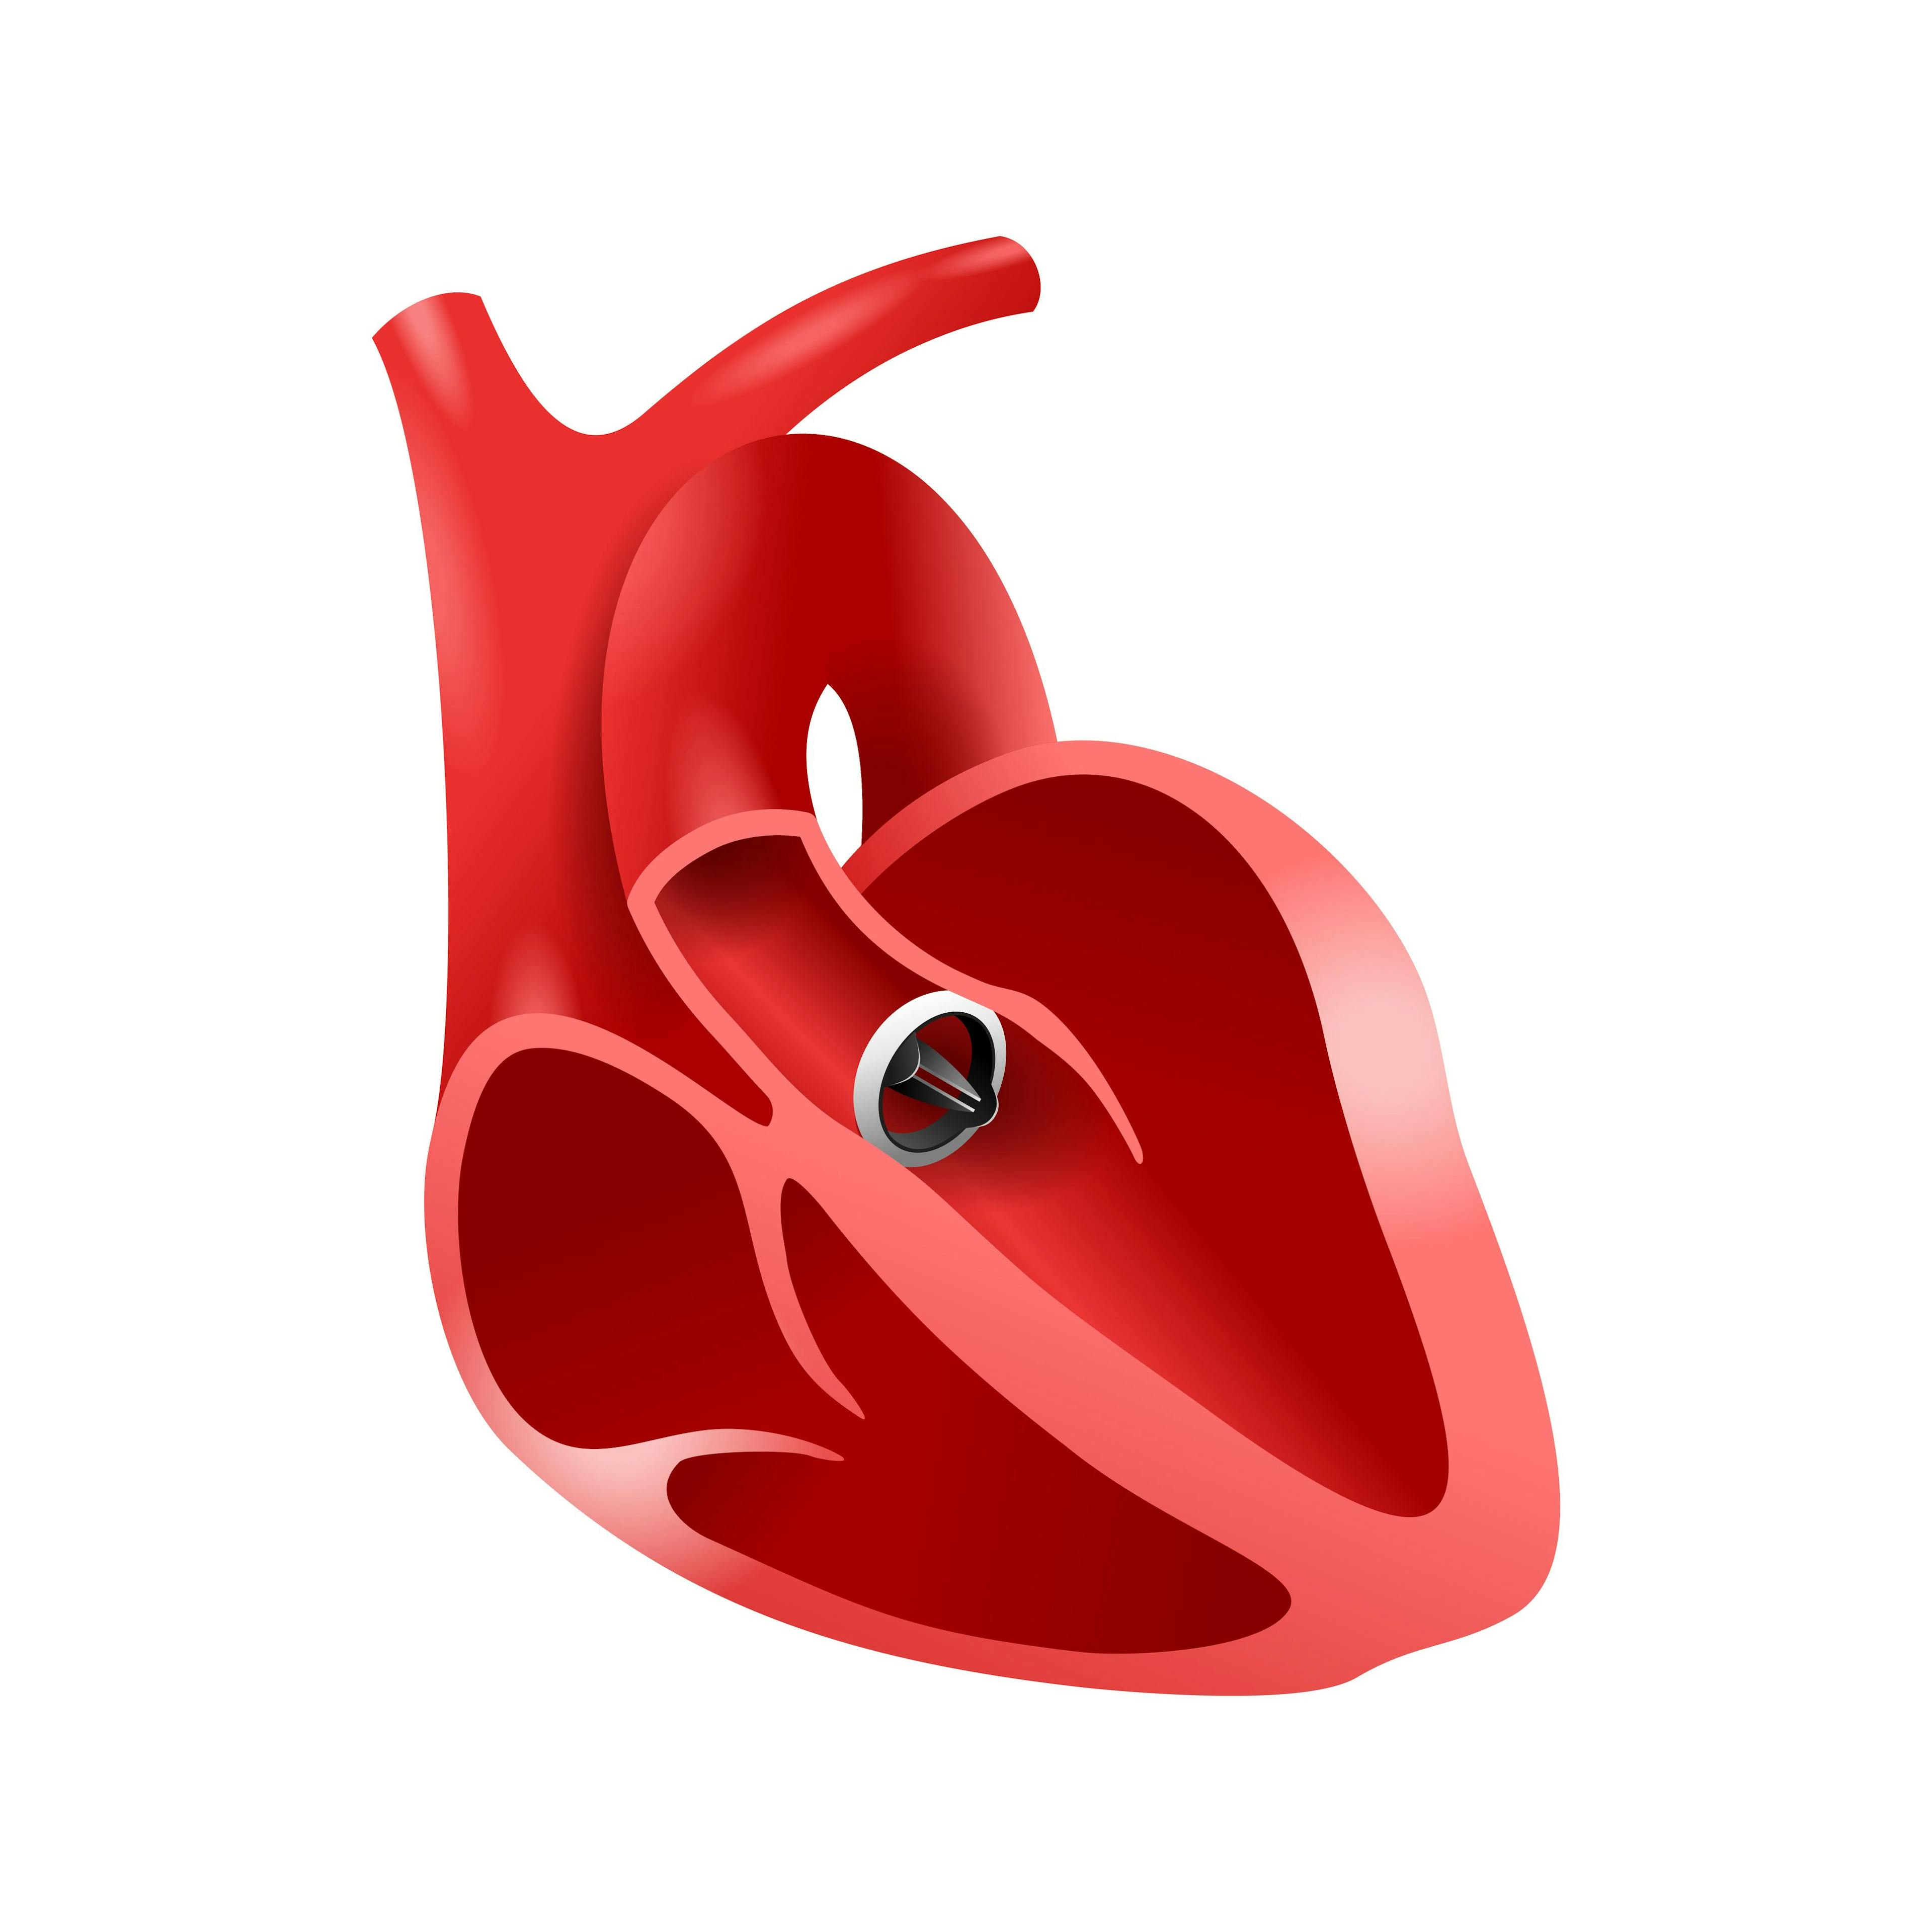 Artificial heart valve | Image Credit: Dmitry Kovalchuk – stock.adobe.com